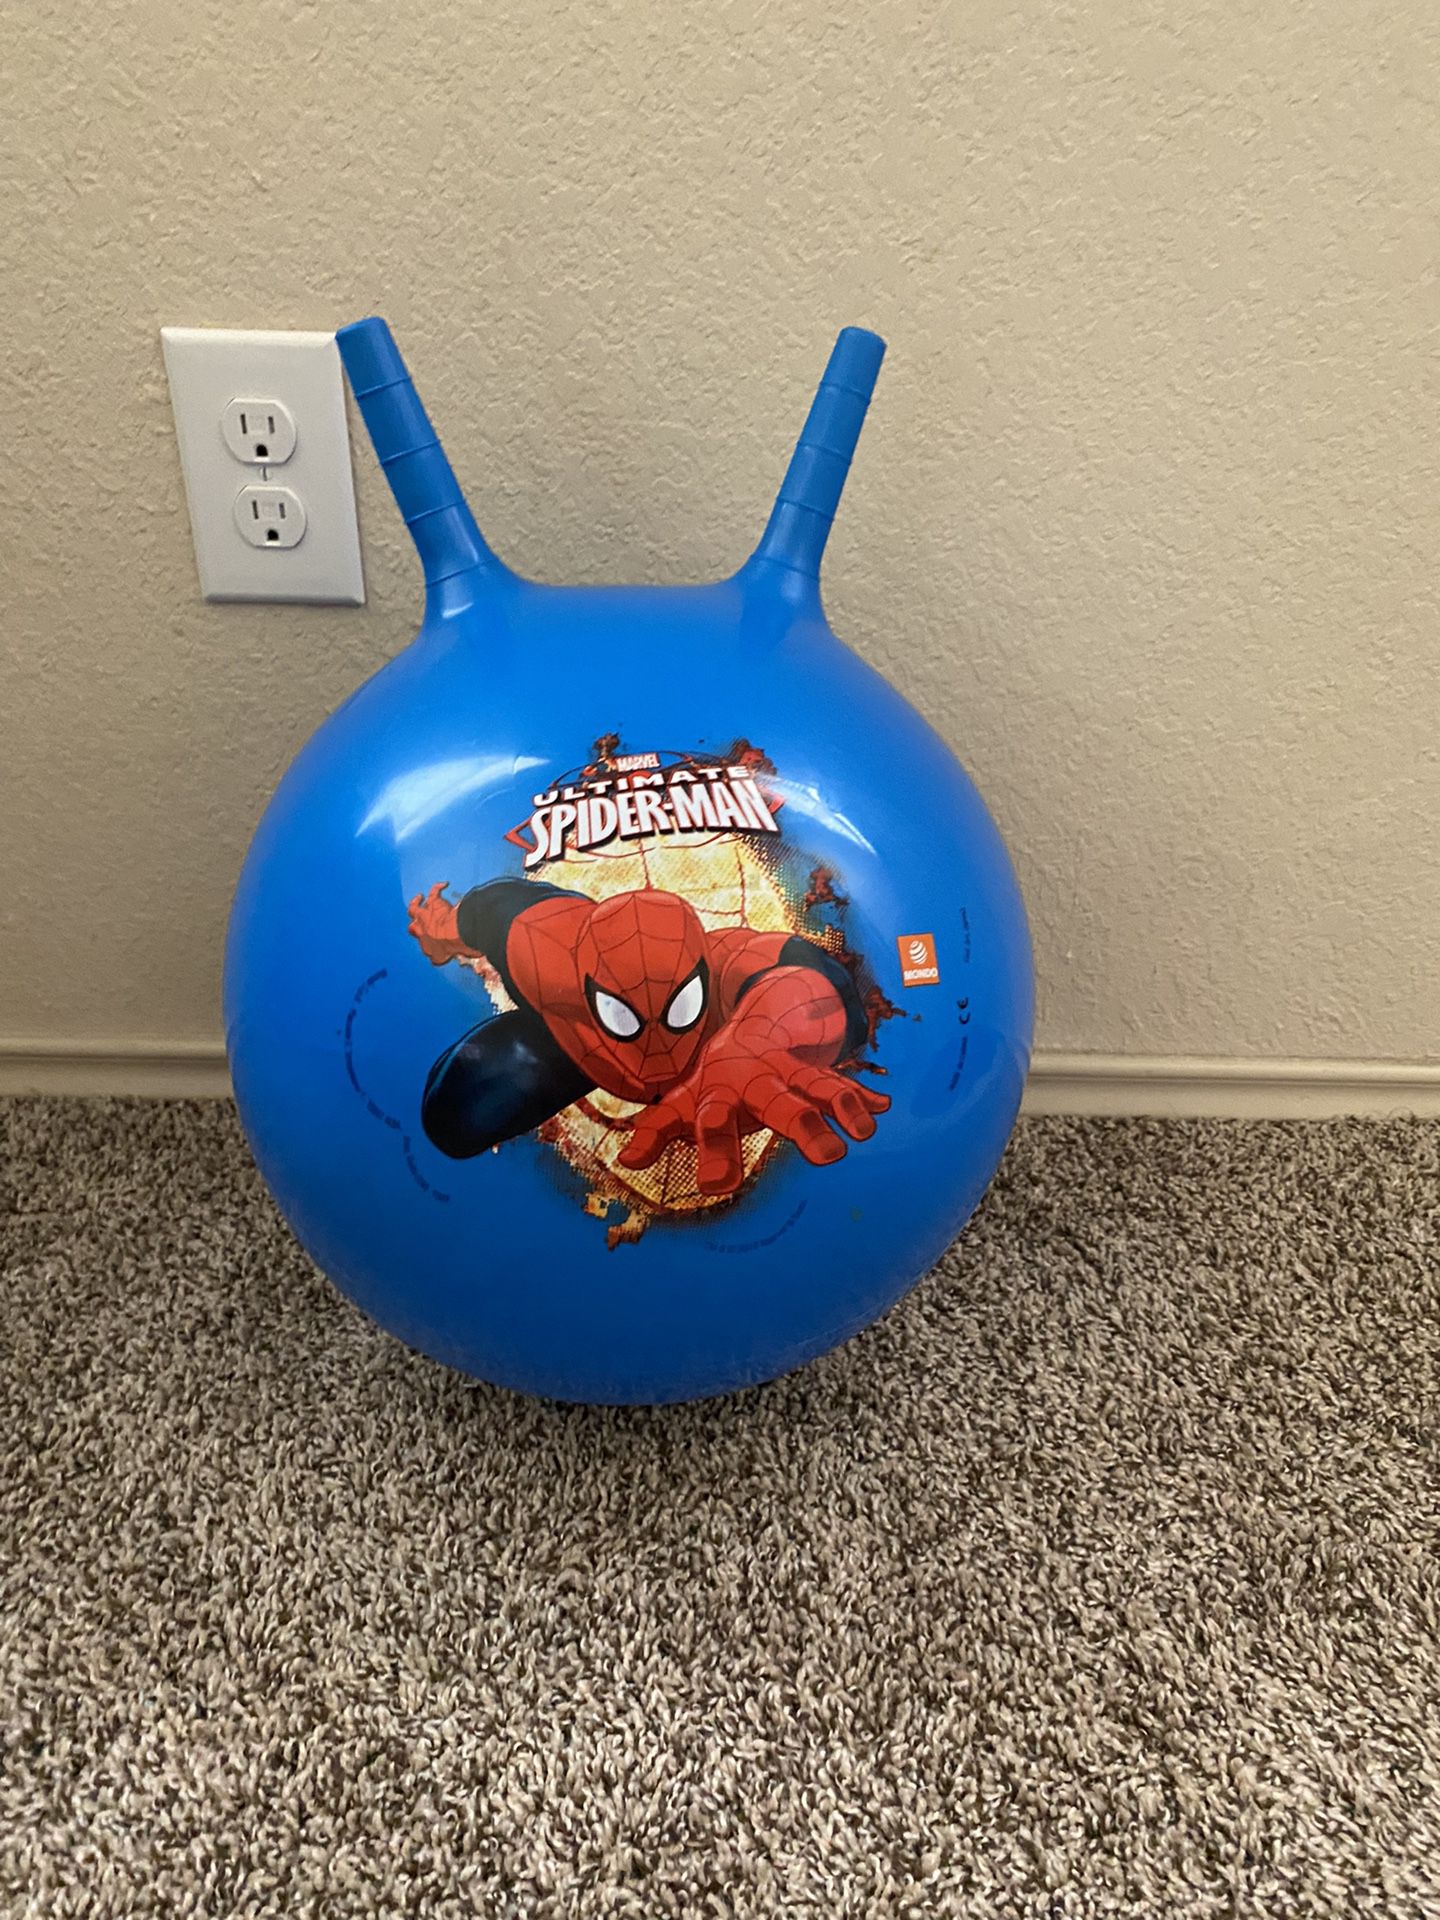 Spider-Man Bouncy Ball